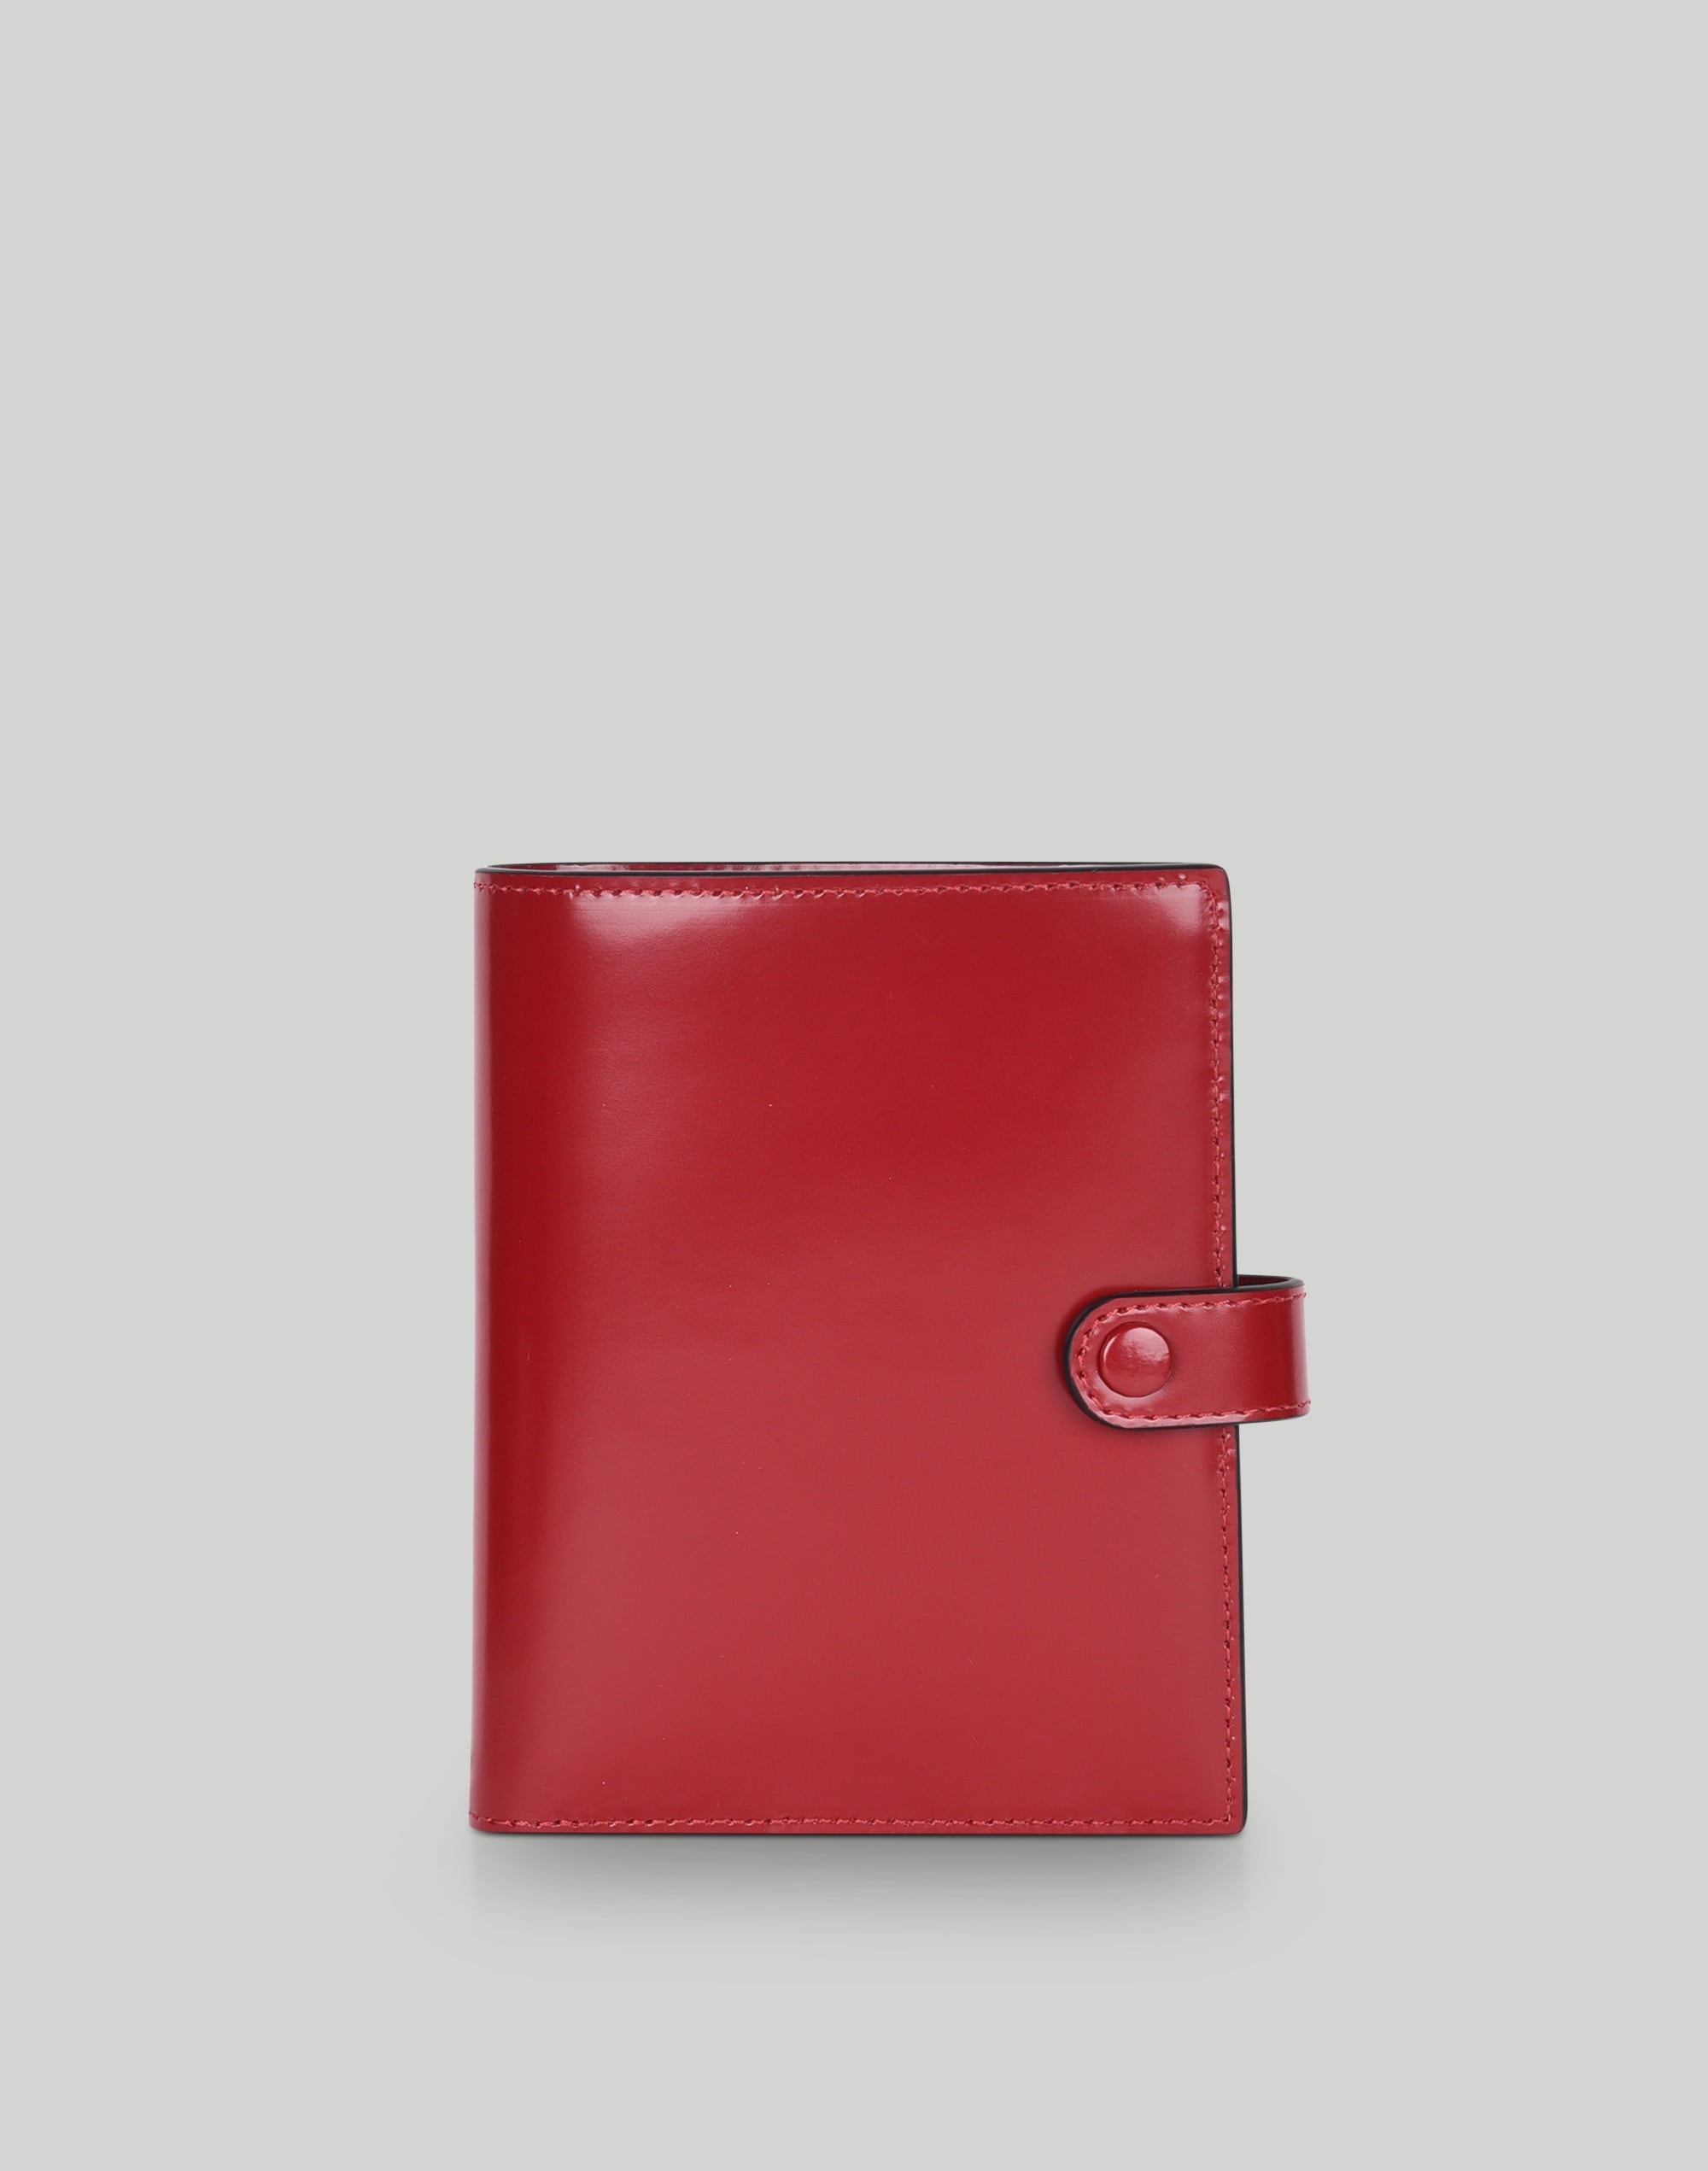 Mw 'hyer Goods Luxe Traveler''s Wallet' In Red